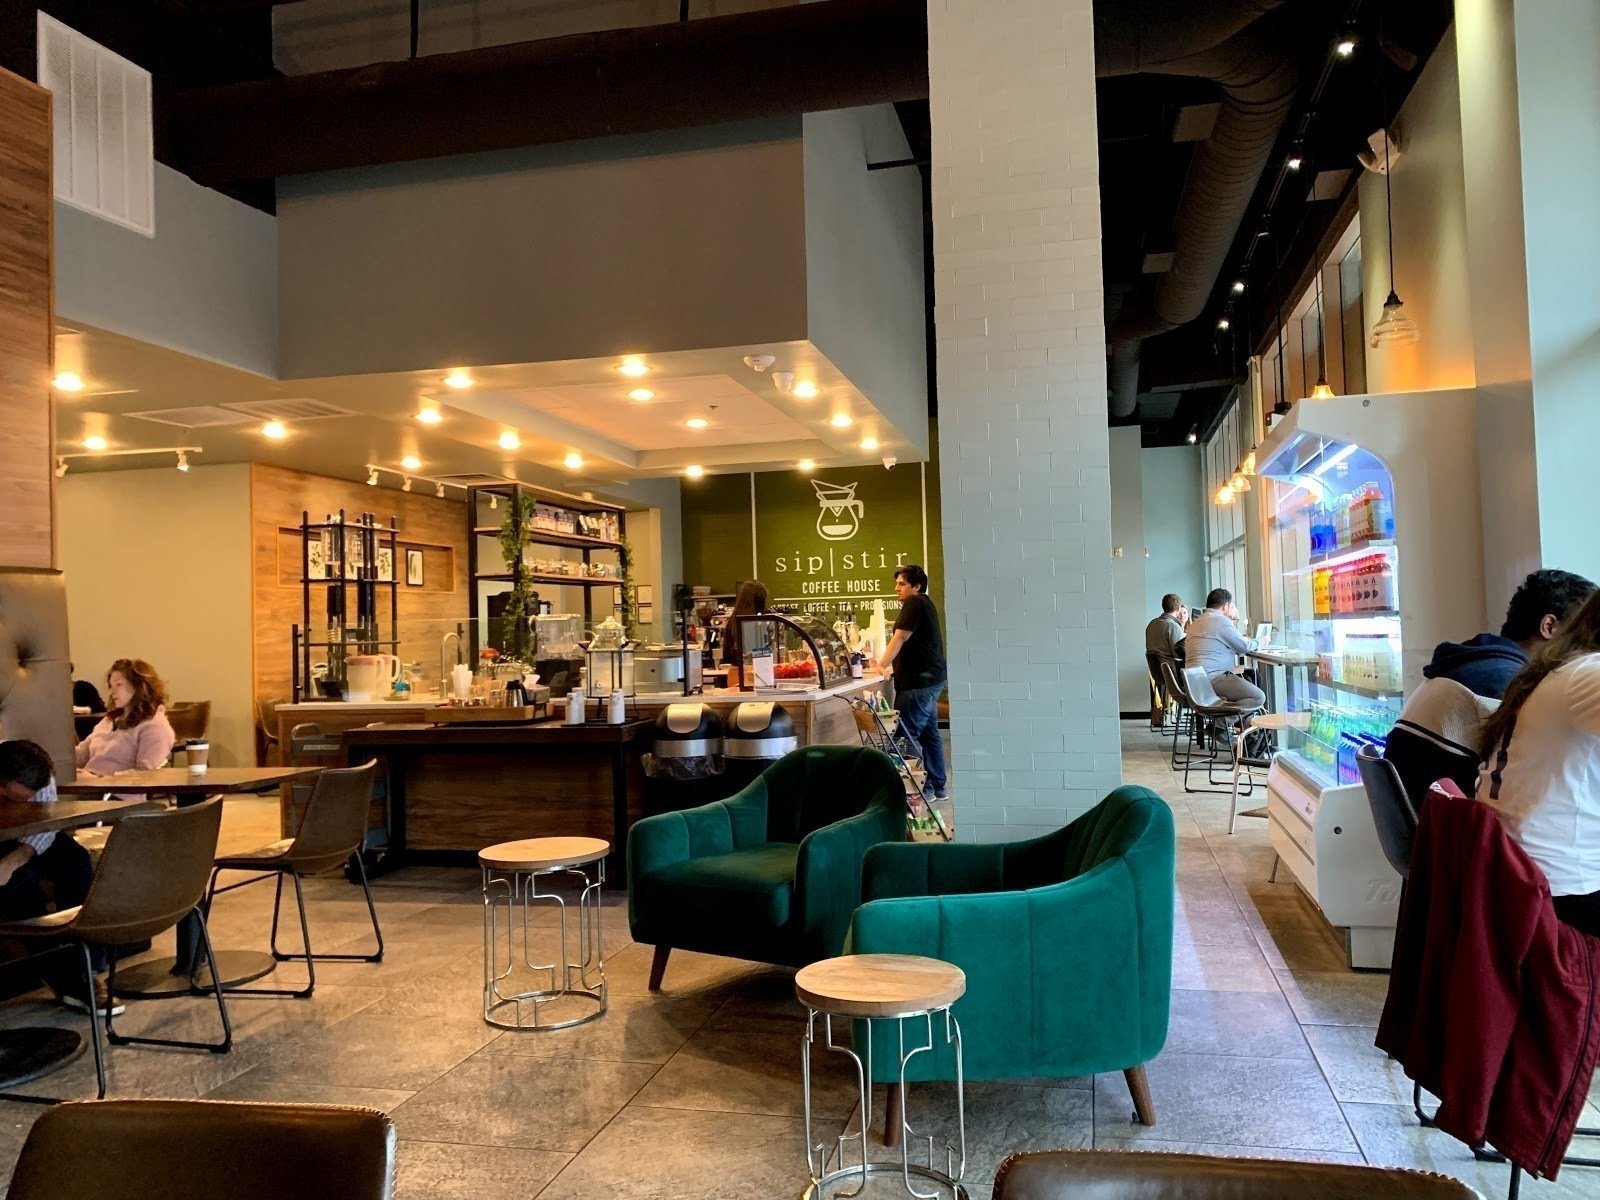 Sip Stir Coffee House: A Work-Friendly Place in Dallas